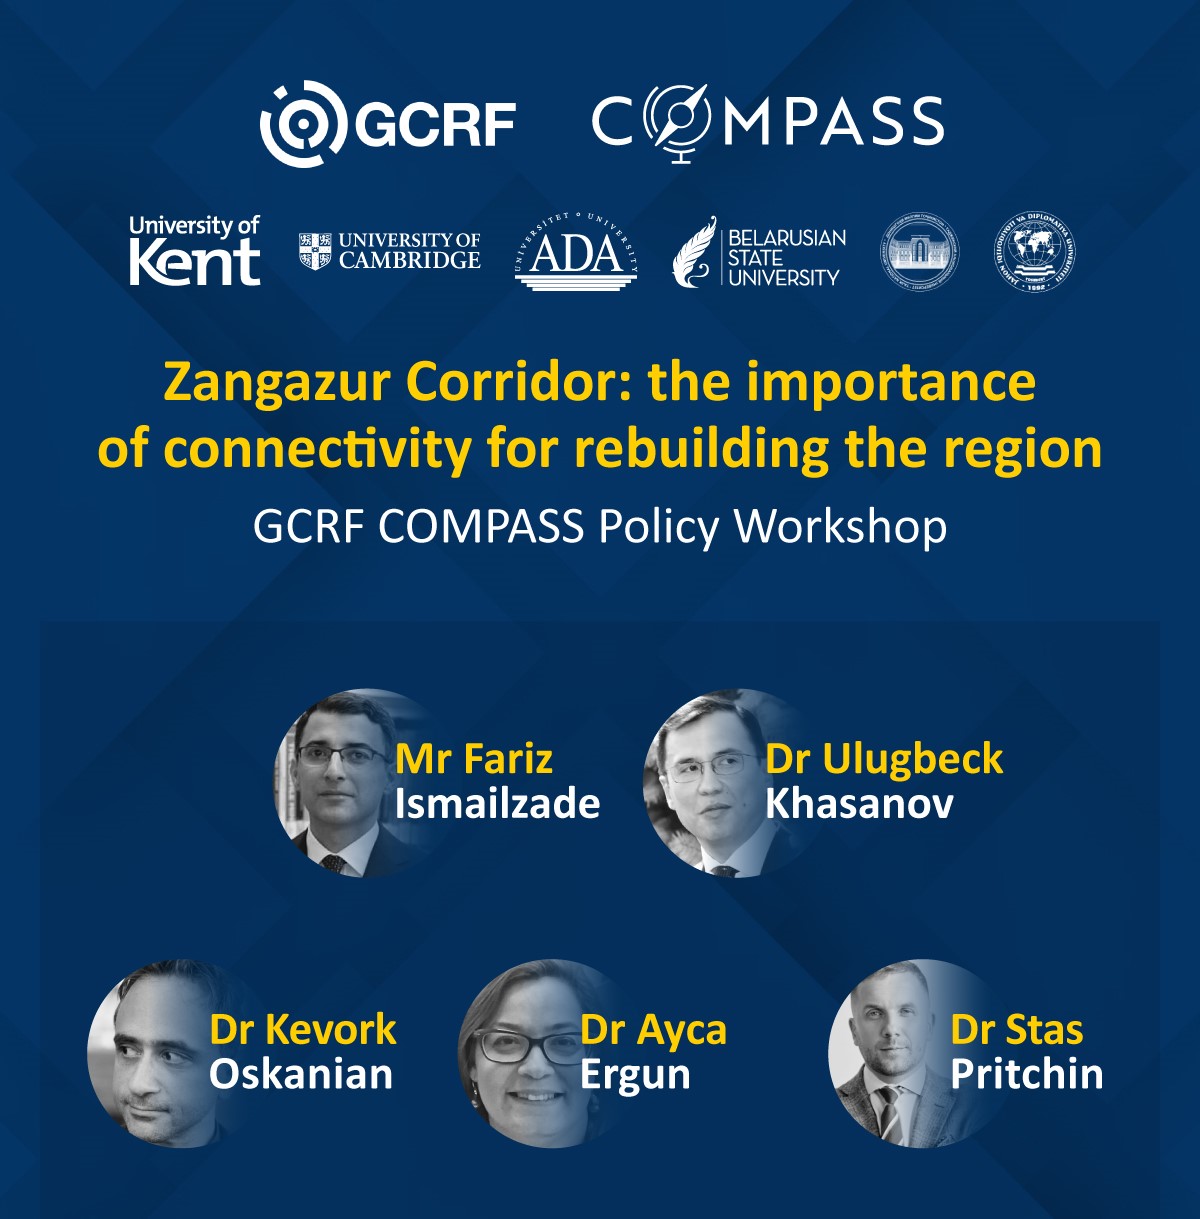 GCRF COMPASS Policy Workshop on Zangazur Corridor